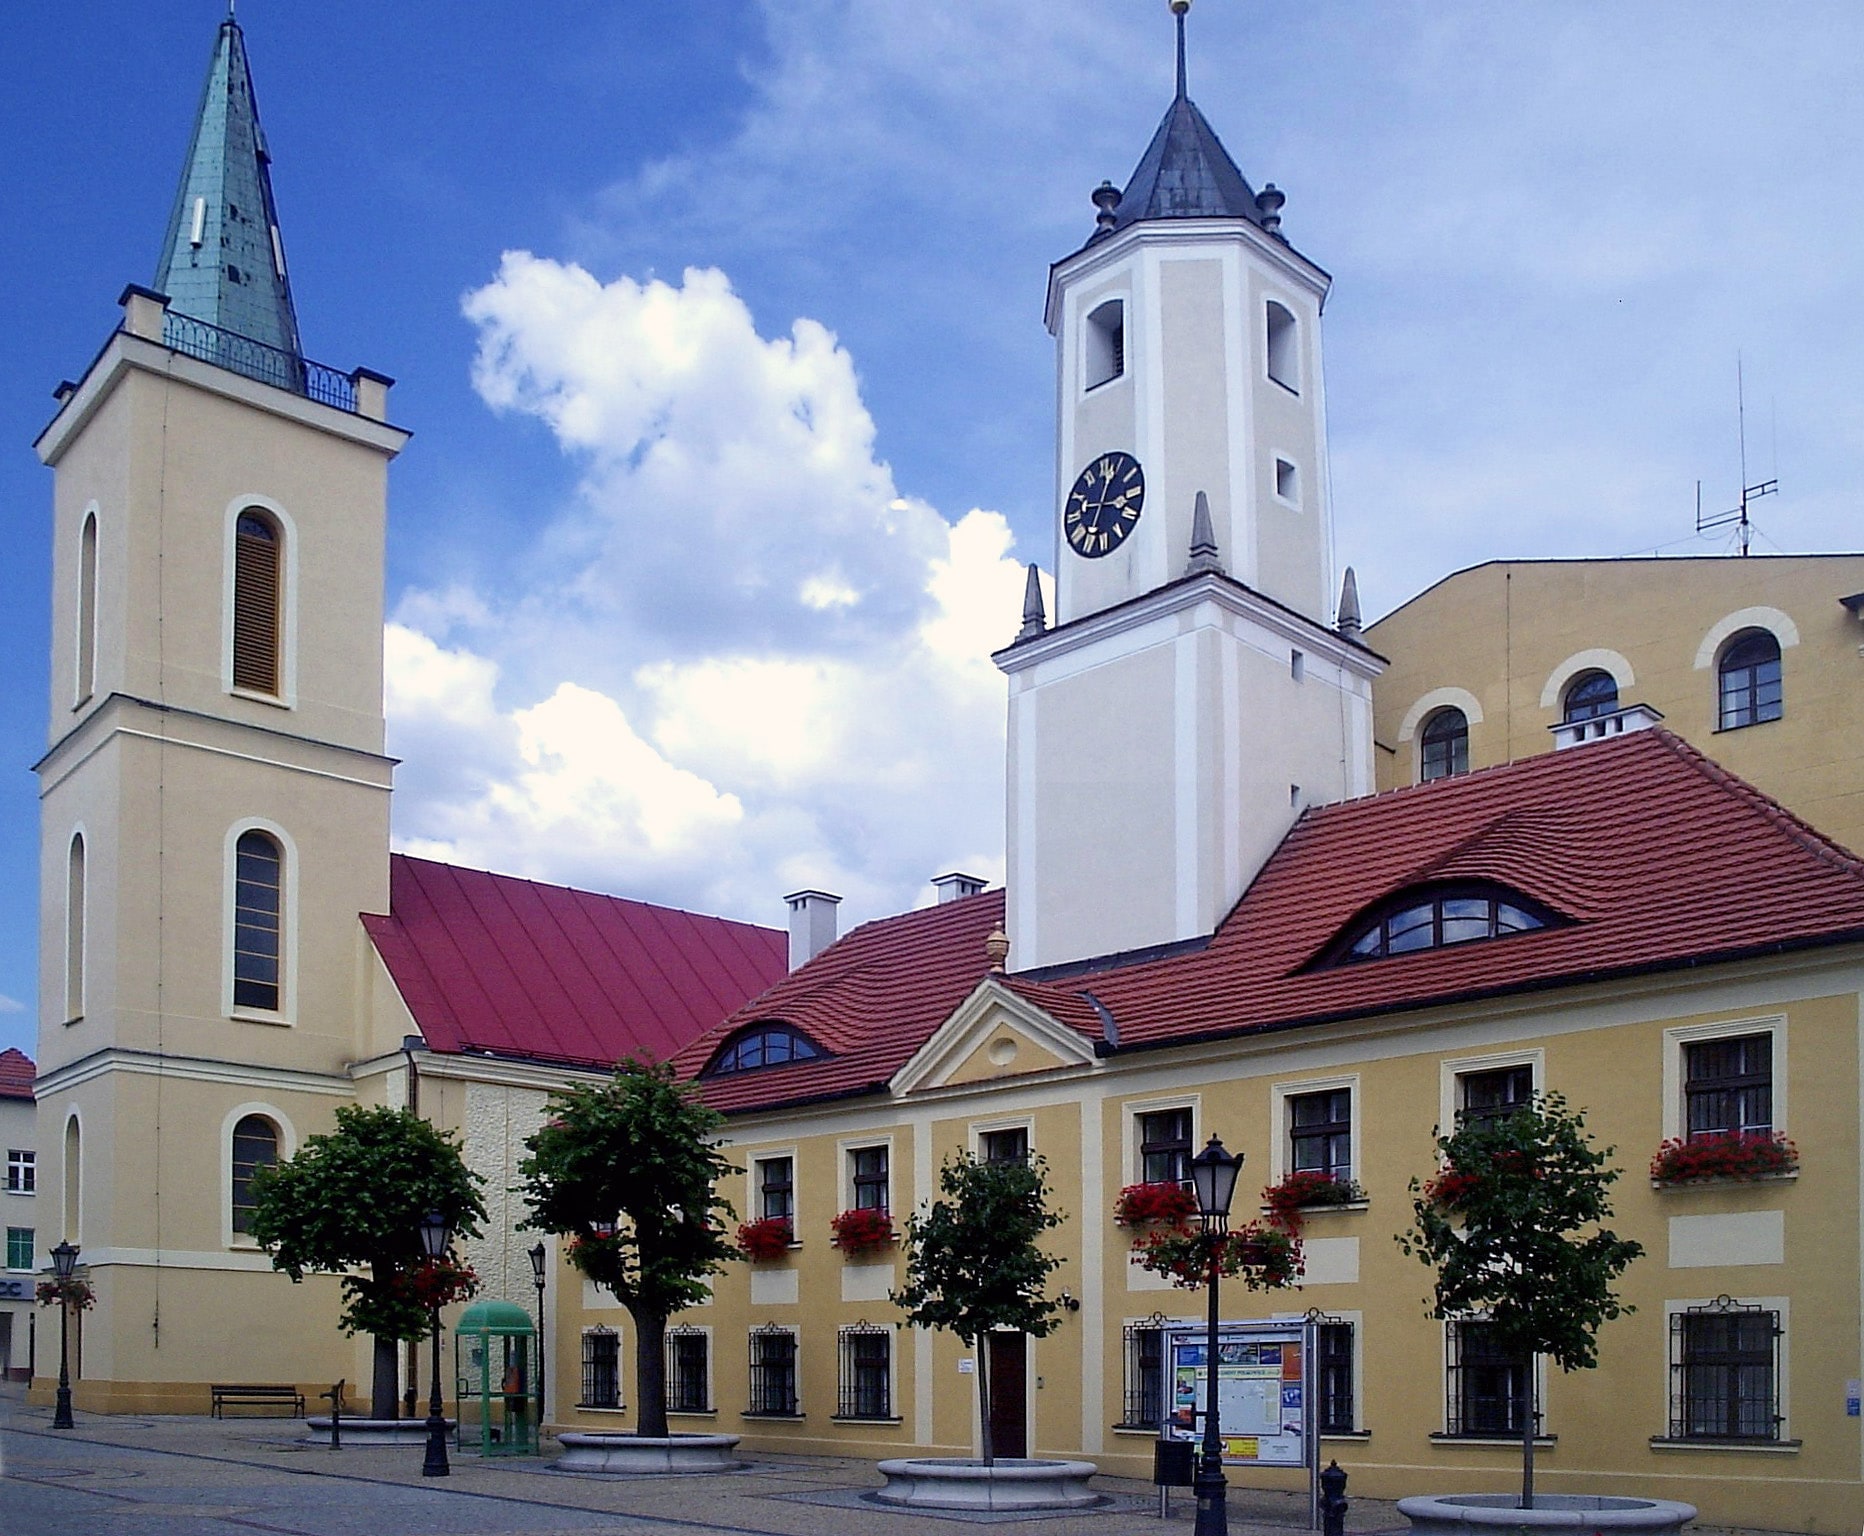 Polkowice, Poland